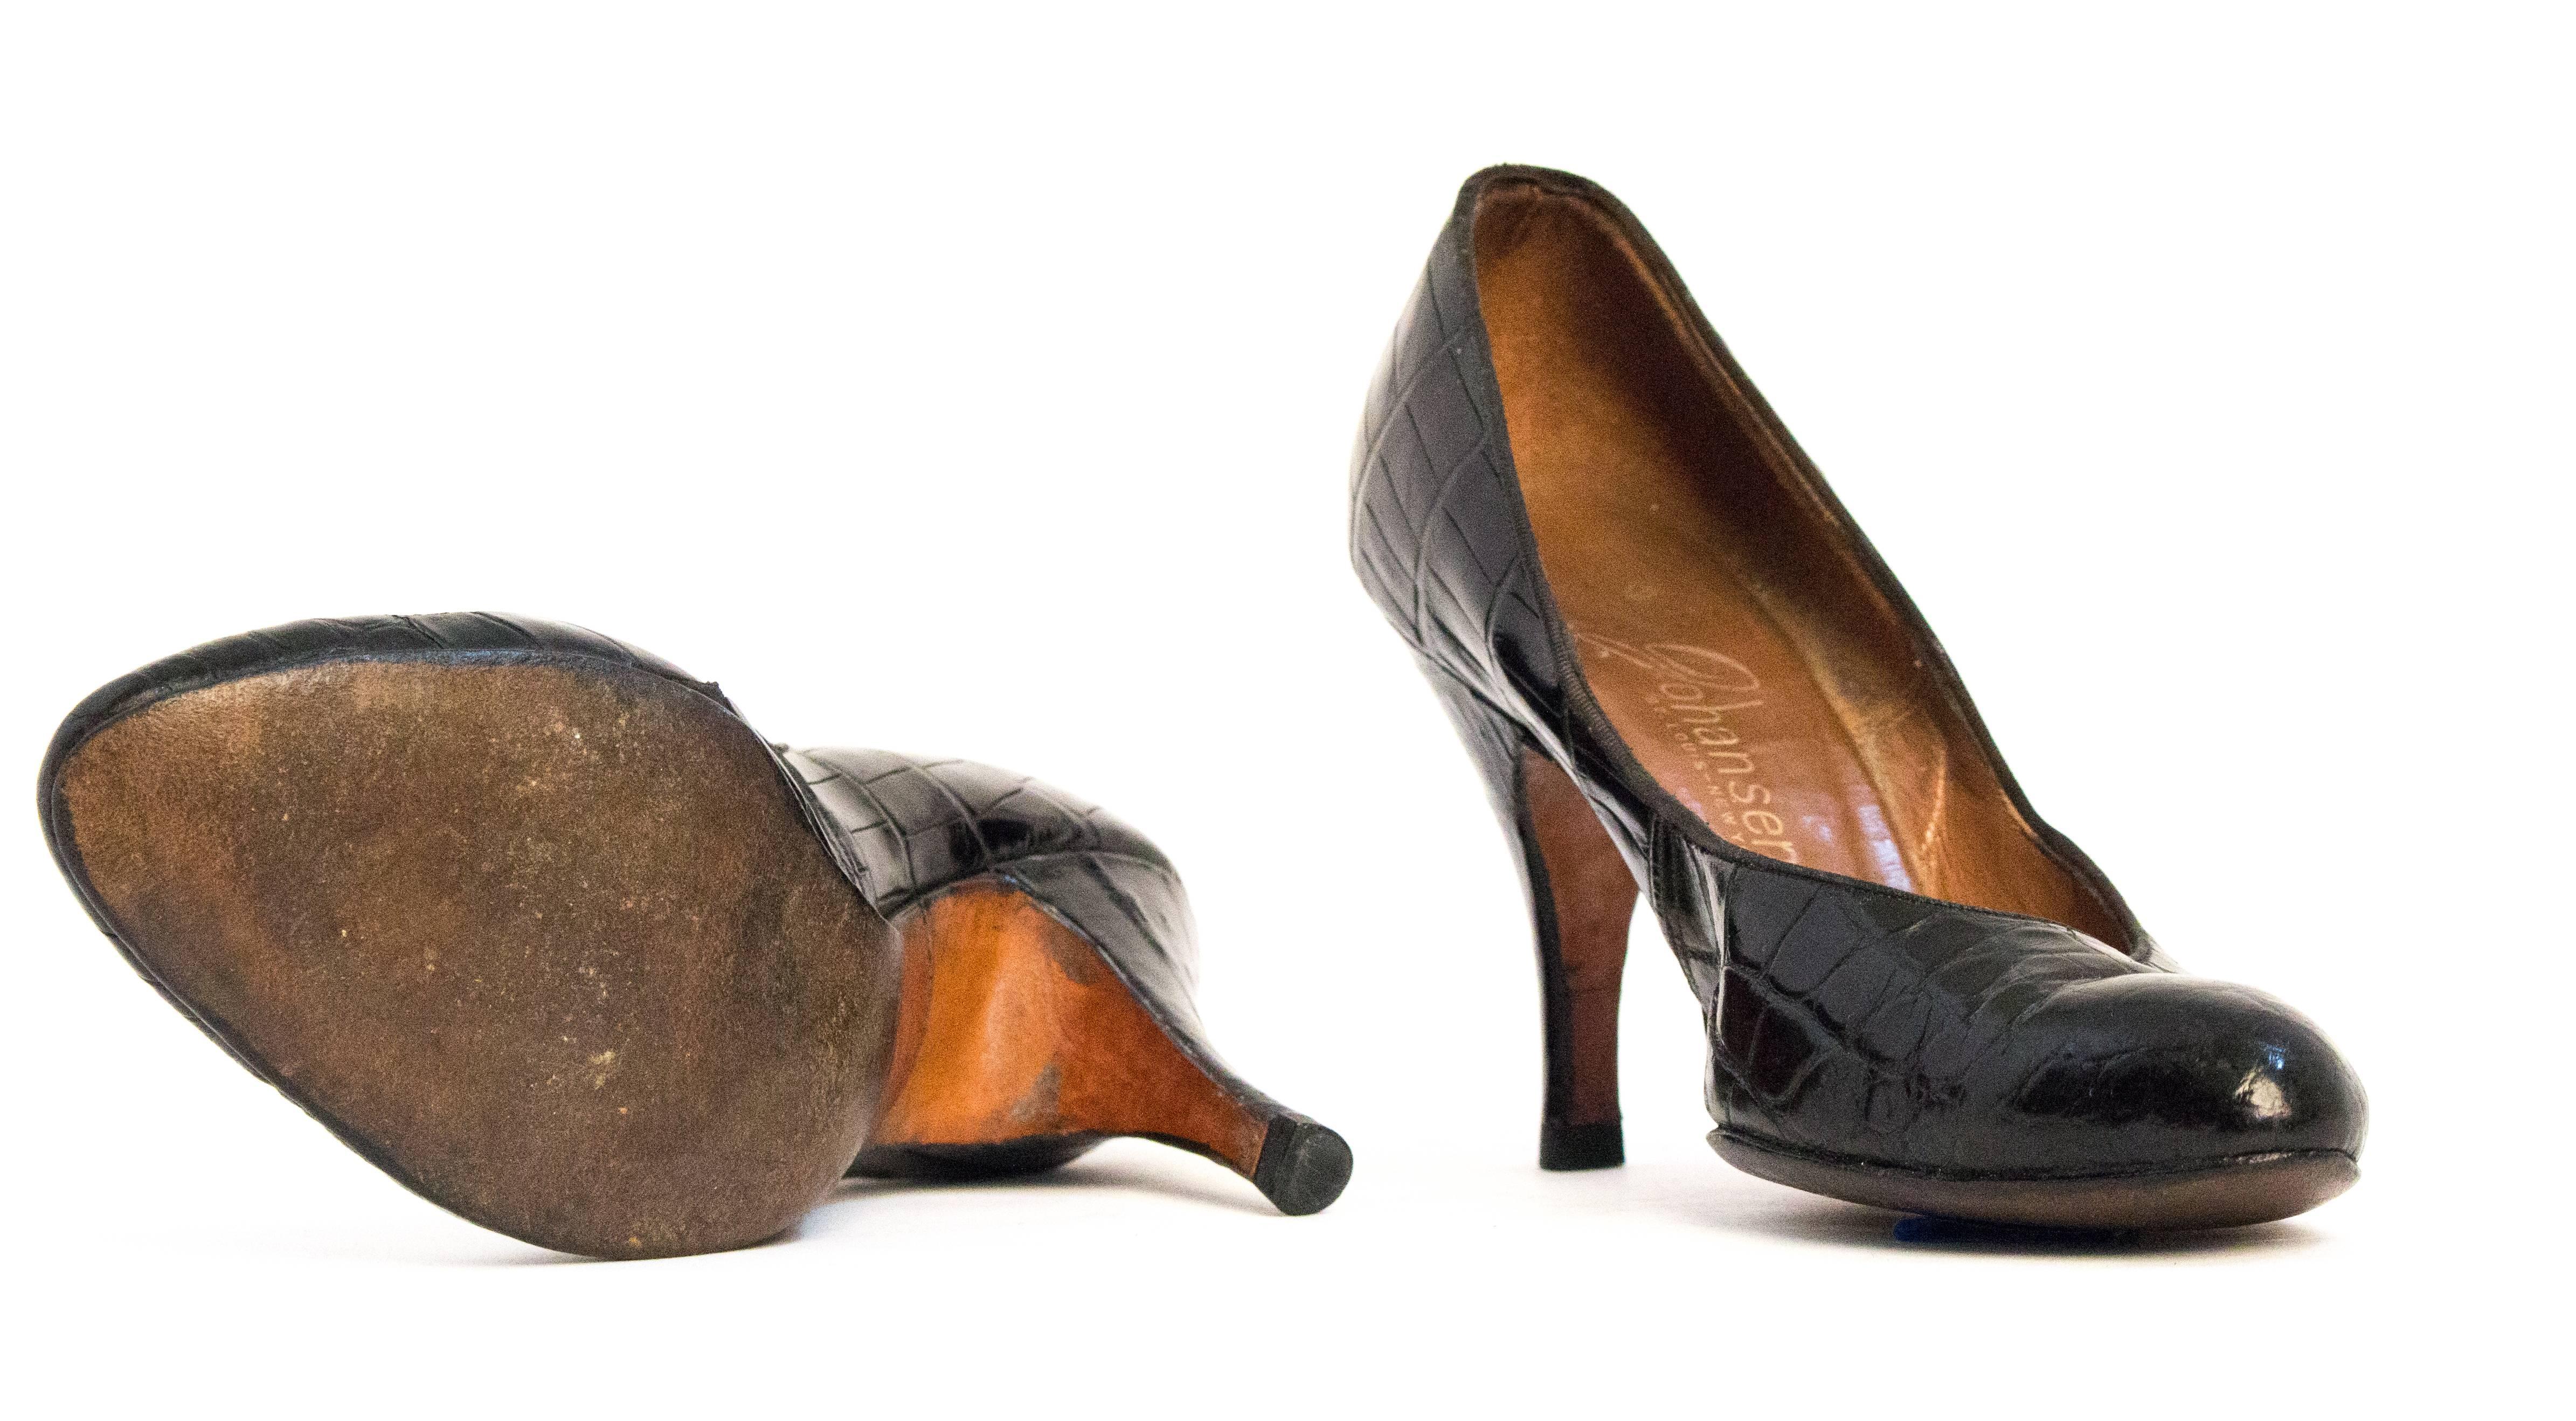 50s black alligator high heels. Leather soles. Black plastic heel caps. 

Measurements

Insole: 9 1/4